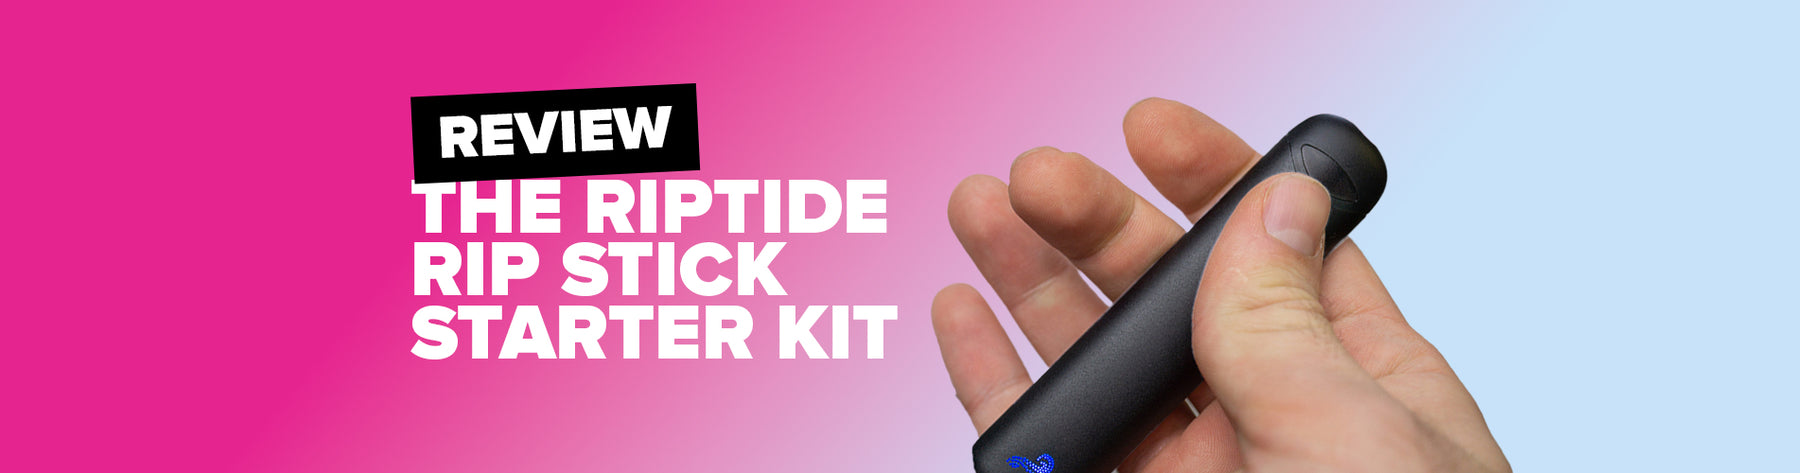 Review Of The Riptide Ripstick Starter Kit